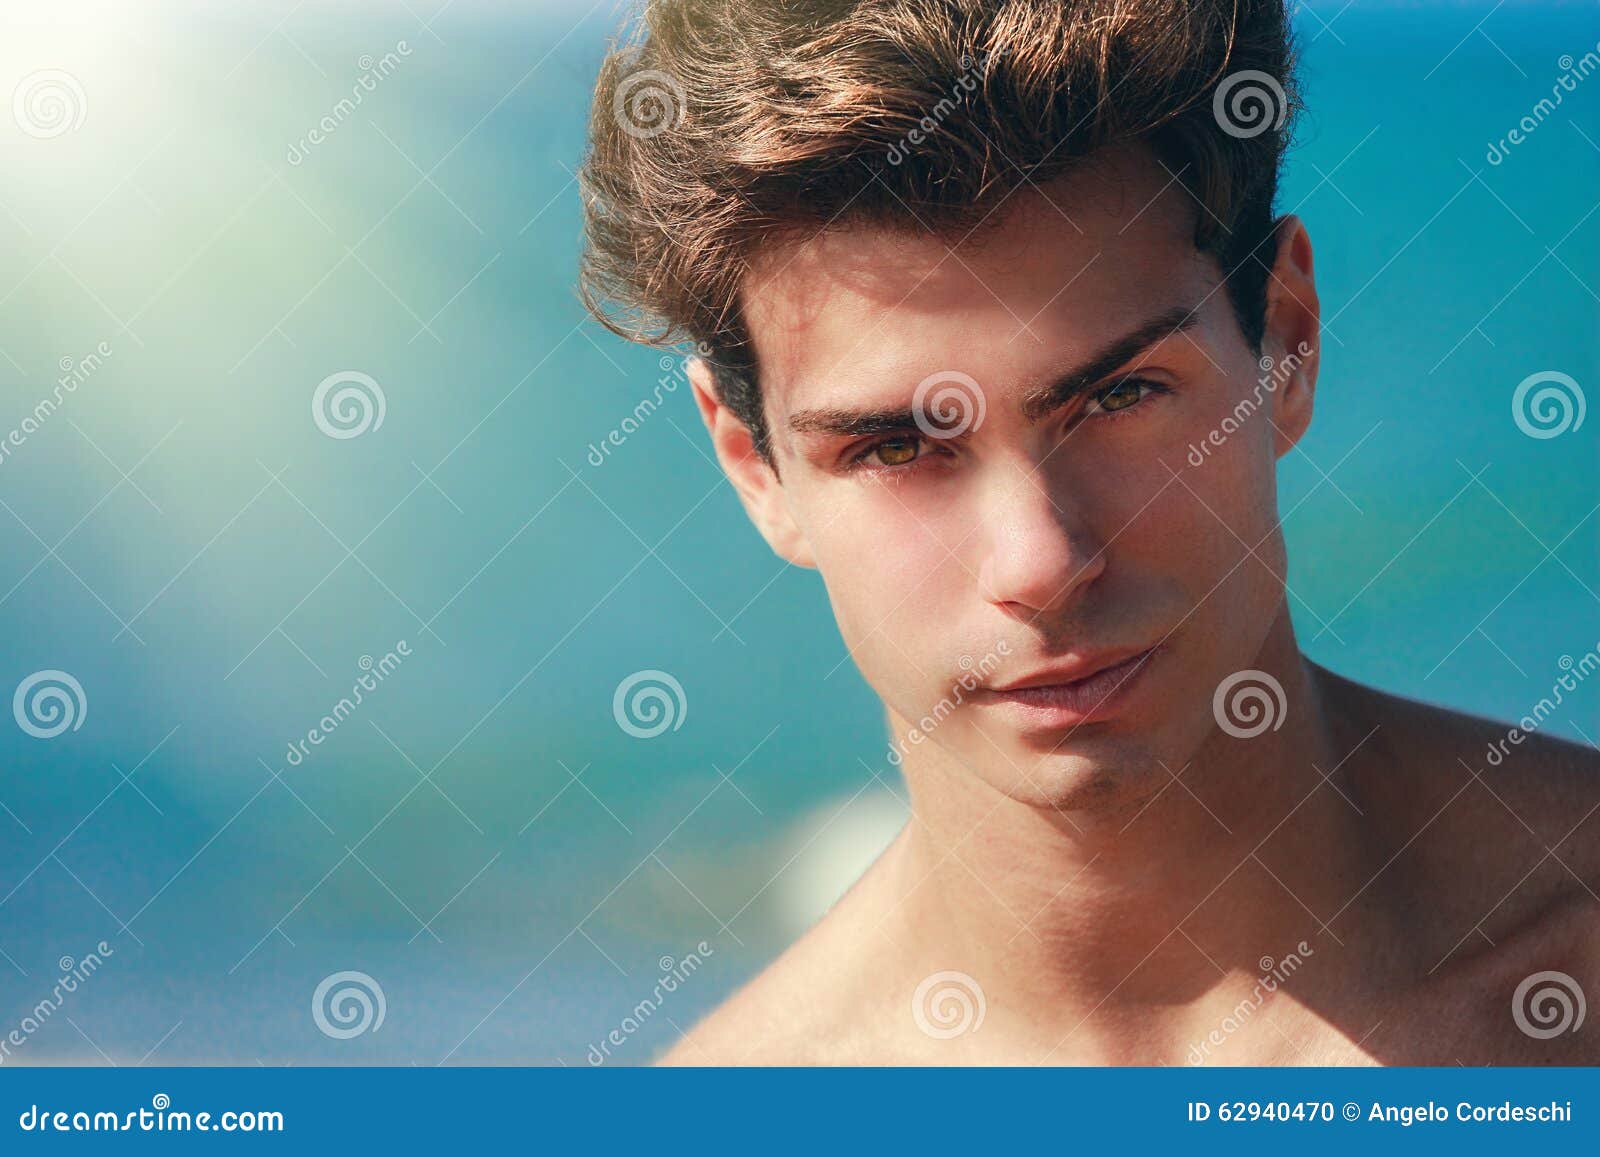 man confident gaze, handsome face model. hair style. blue background